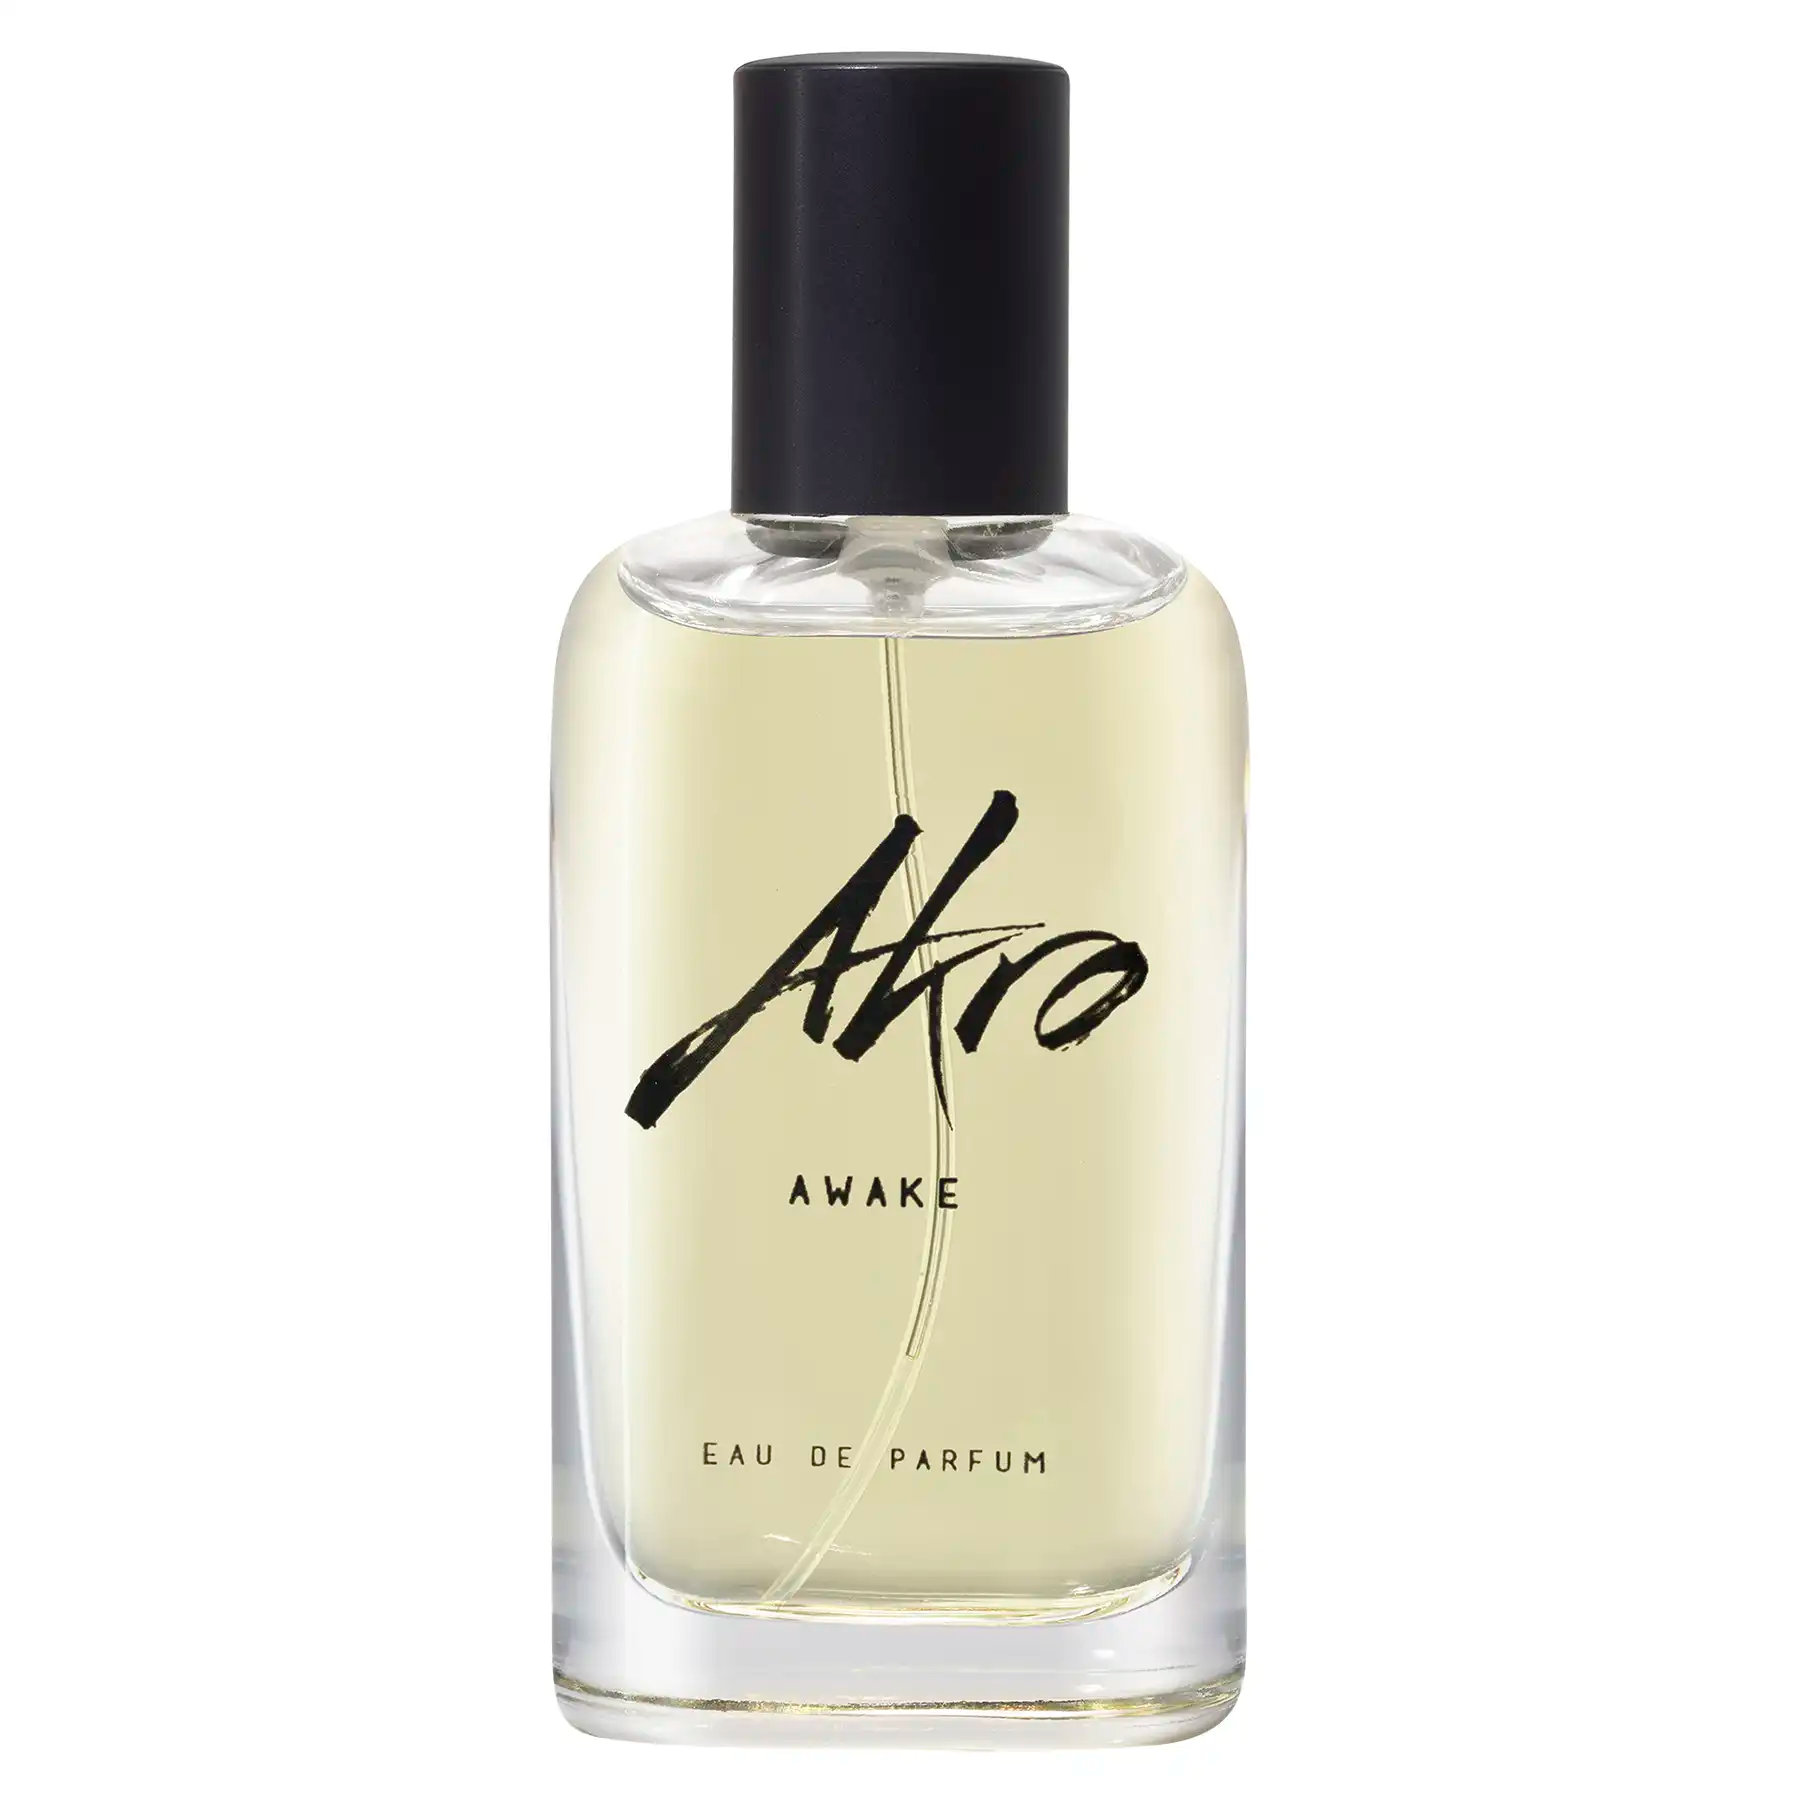 Akro Awake Eau de Parfum 30ml